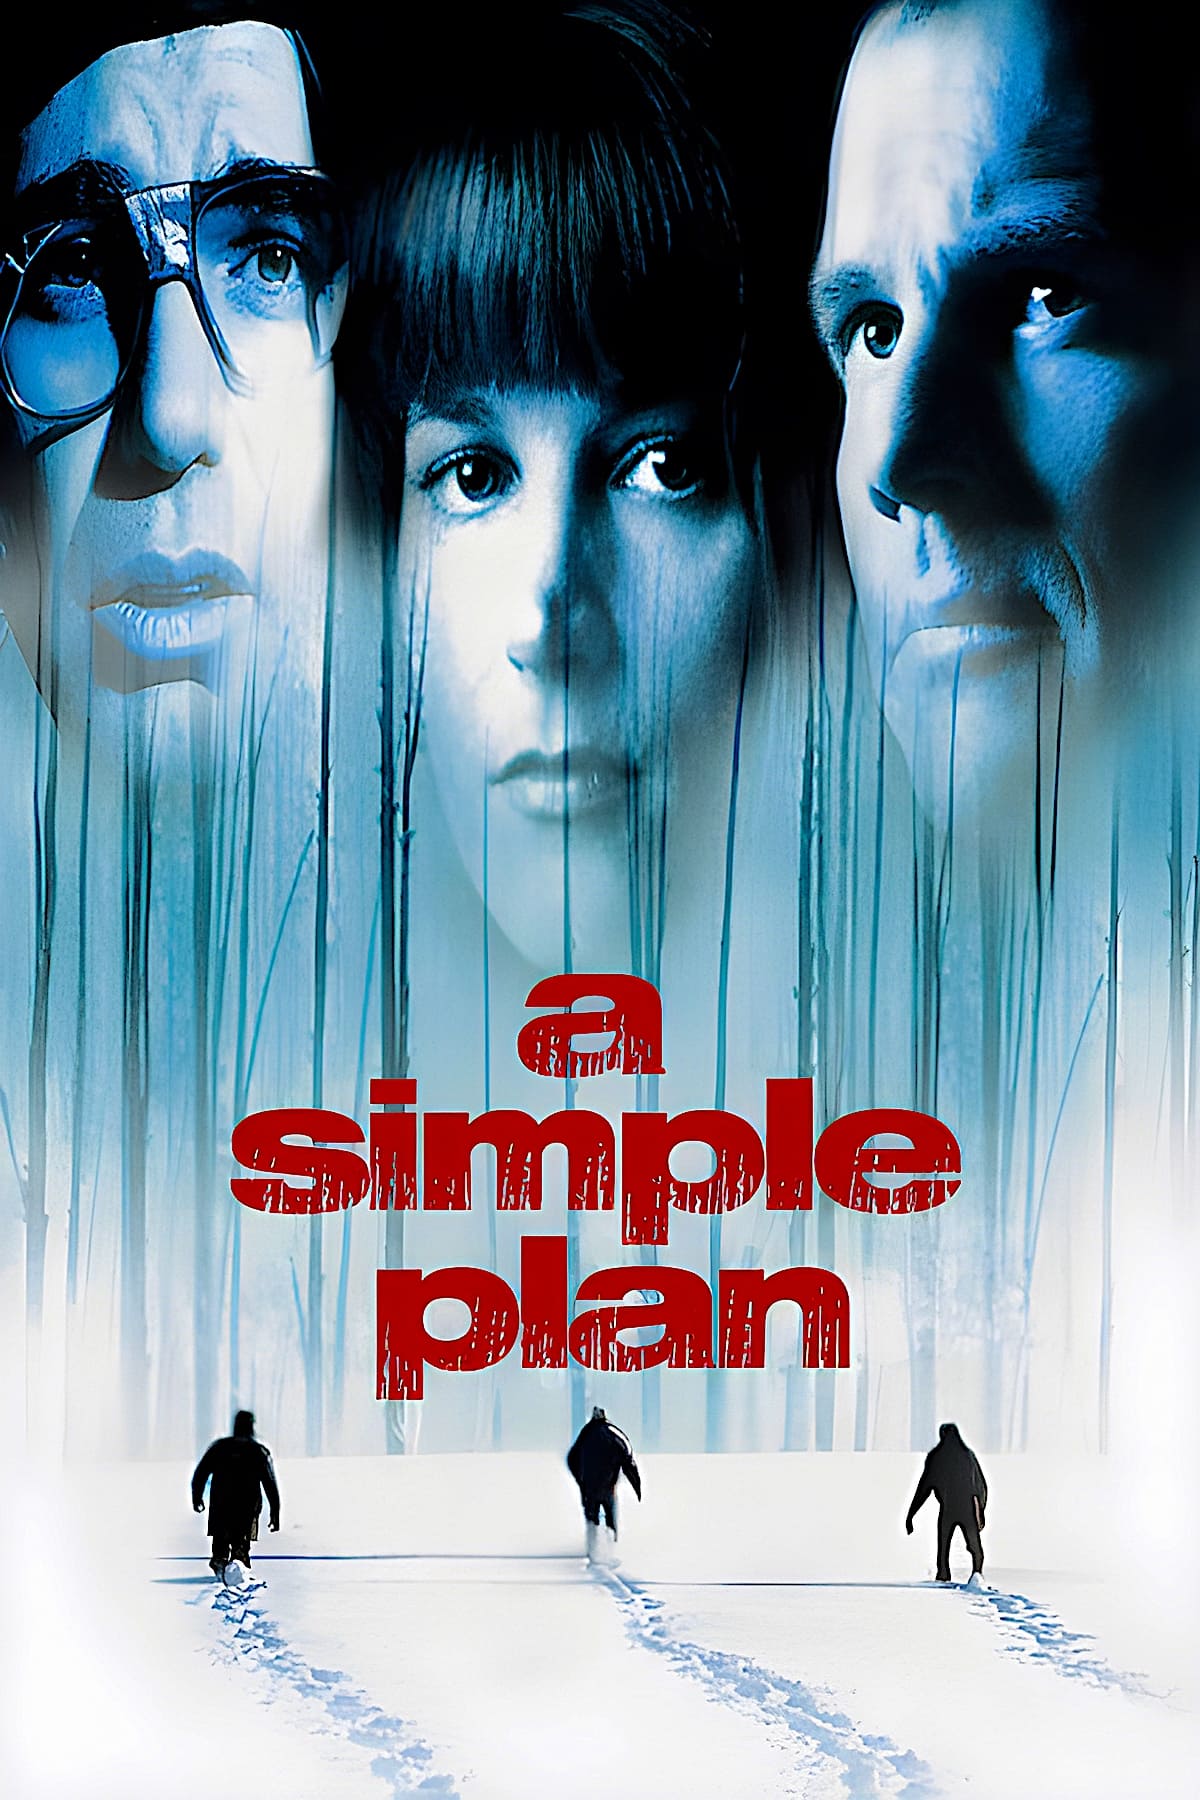 Un plan simple (1998)